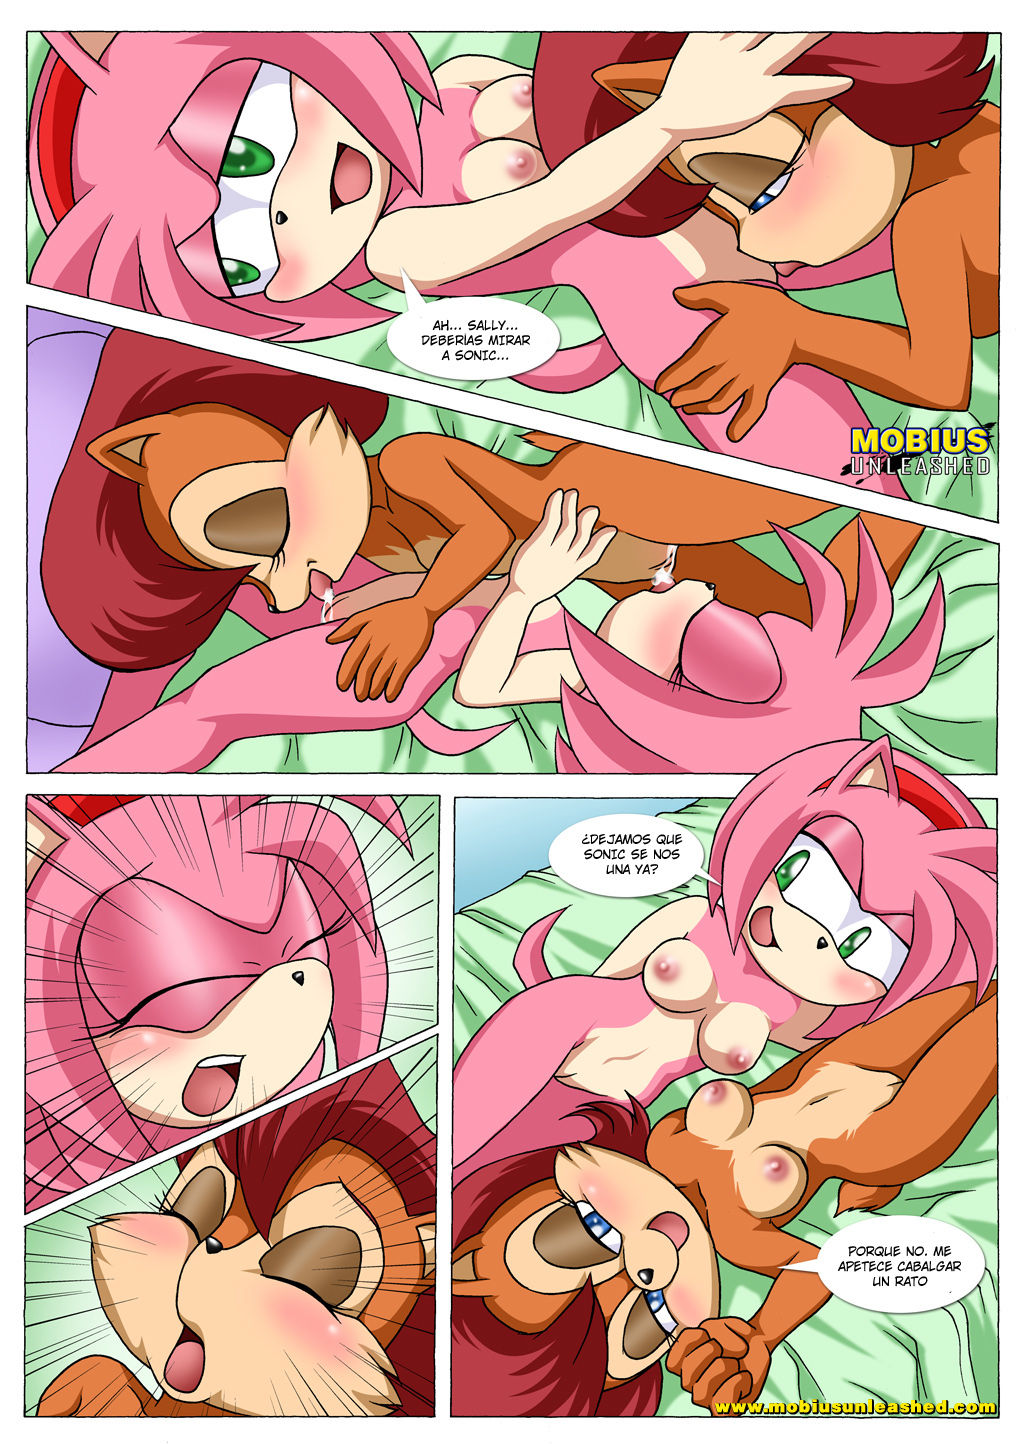 Divertida Noche de Sábado #1 (Saga Completa de Sonic, Sally, Amy, Tails, Knuckles) - 4 - Comics Porno - Hentai Manga - Cartoon XXX